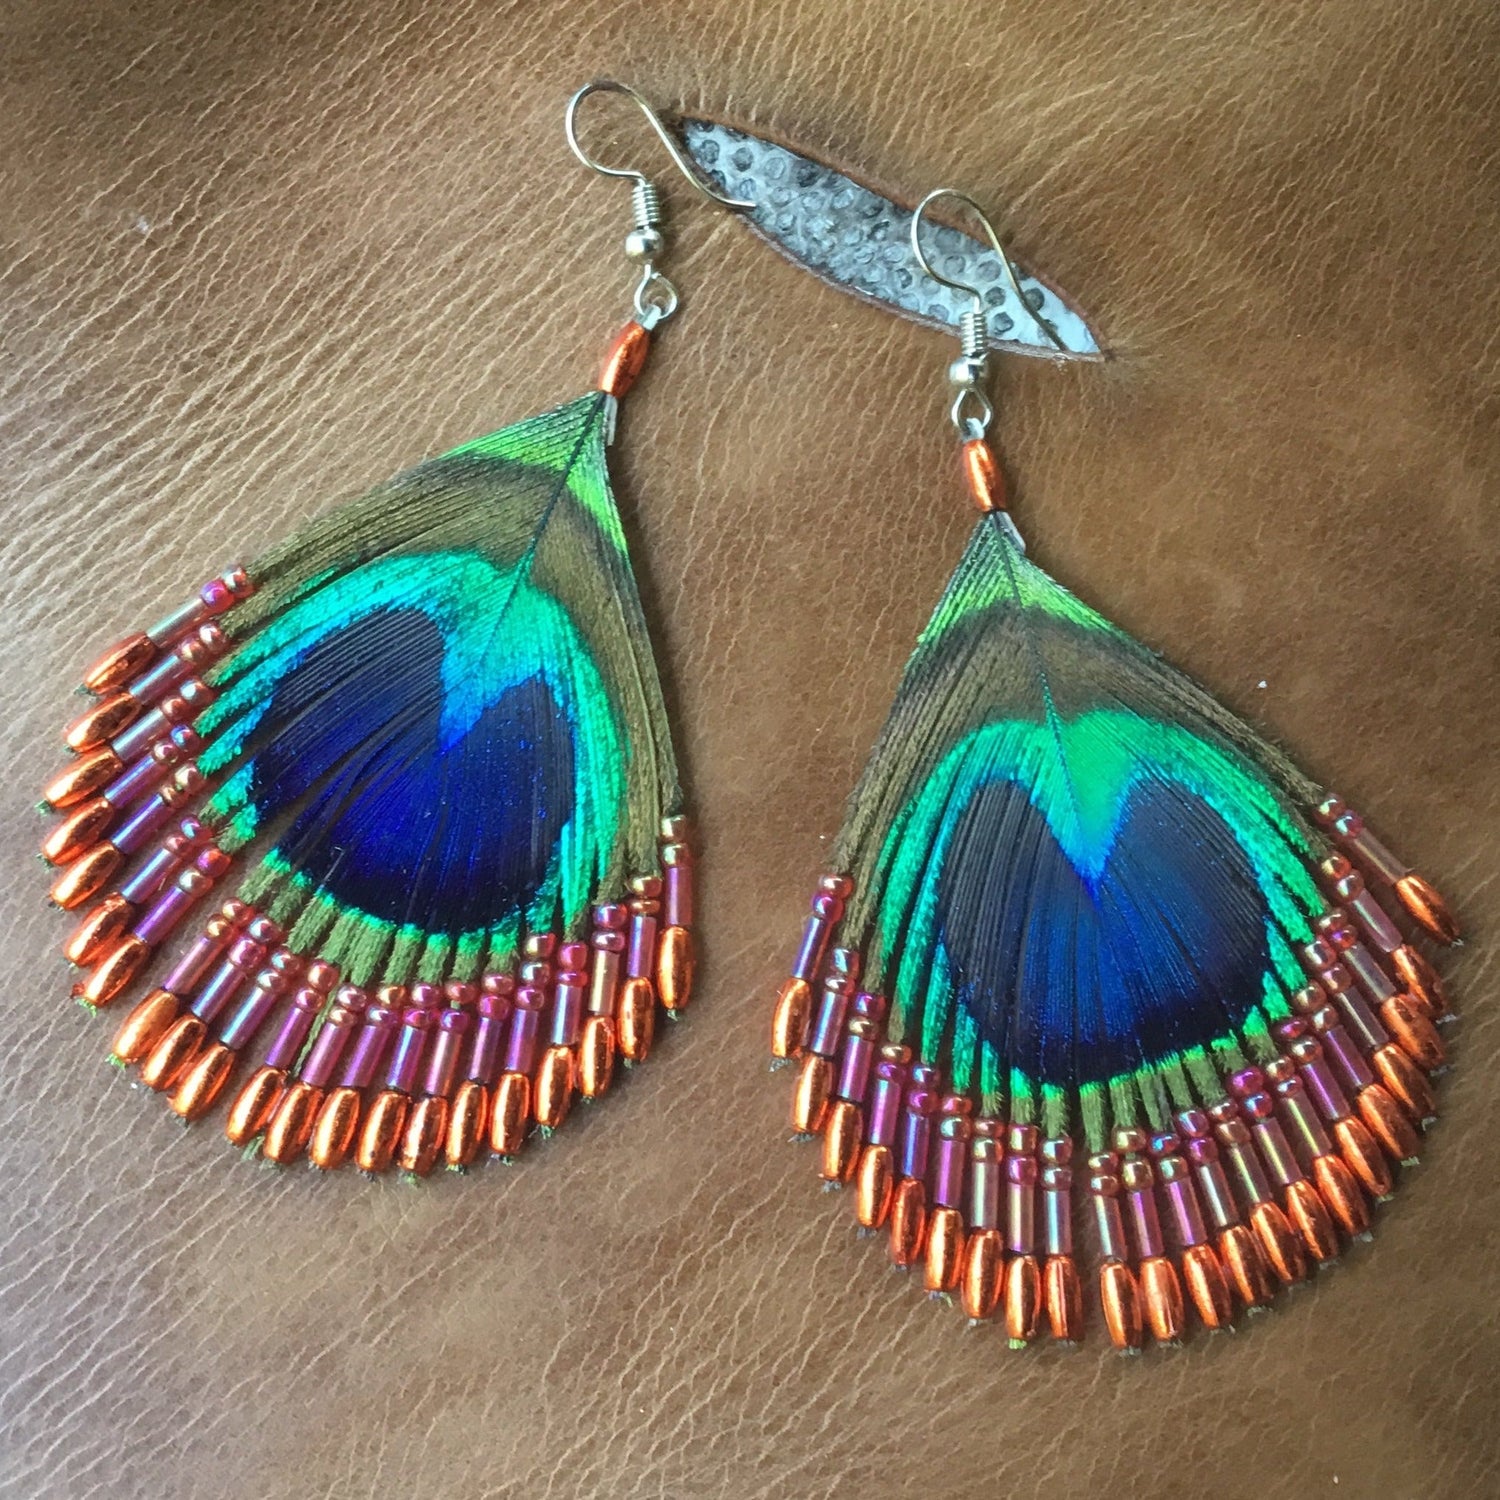 Hippie Earrings and Boho Jewelry